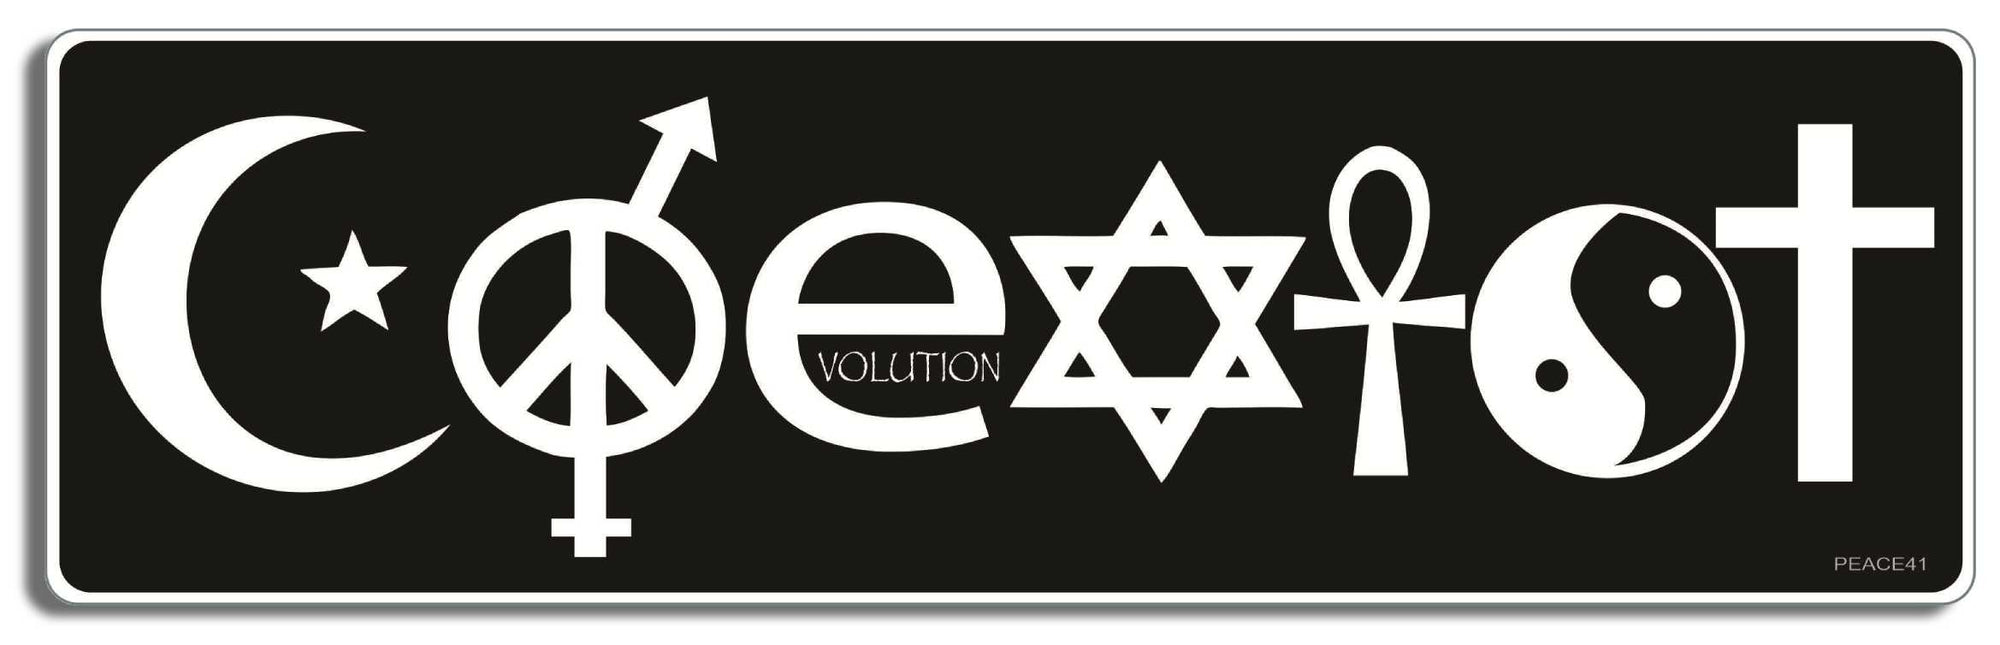 Coexist Black - 3" x 10" -  Decal Bumper Sticker-peace Bumper Sticker Car Magnet Coexist Black-  Decal for carsliberal, peace, political